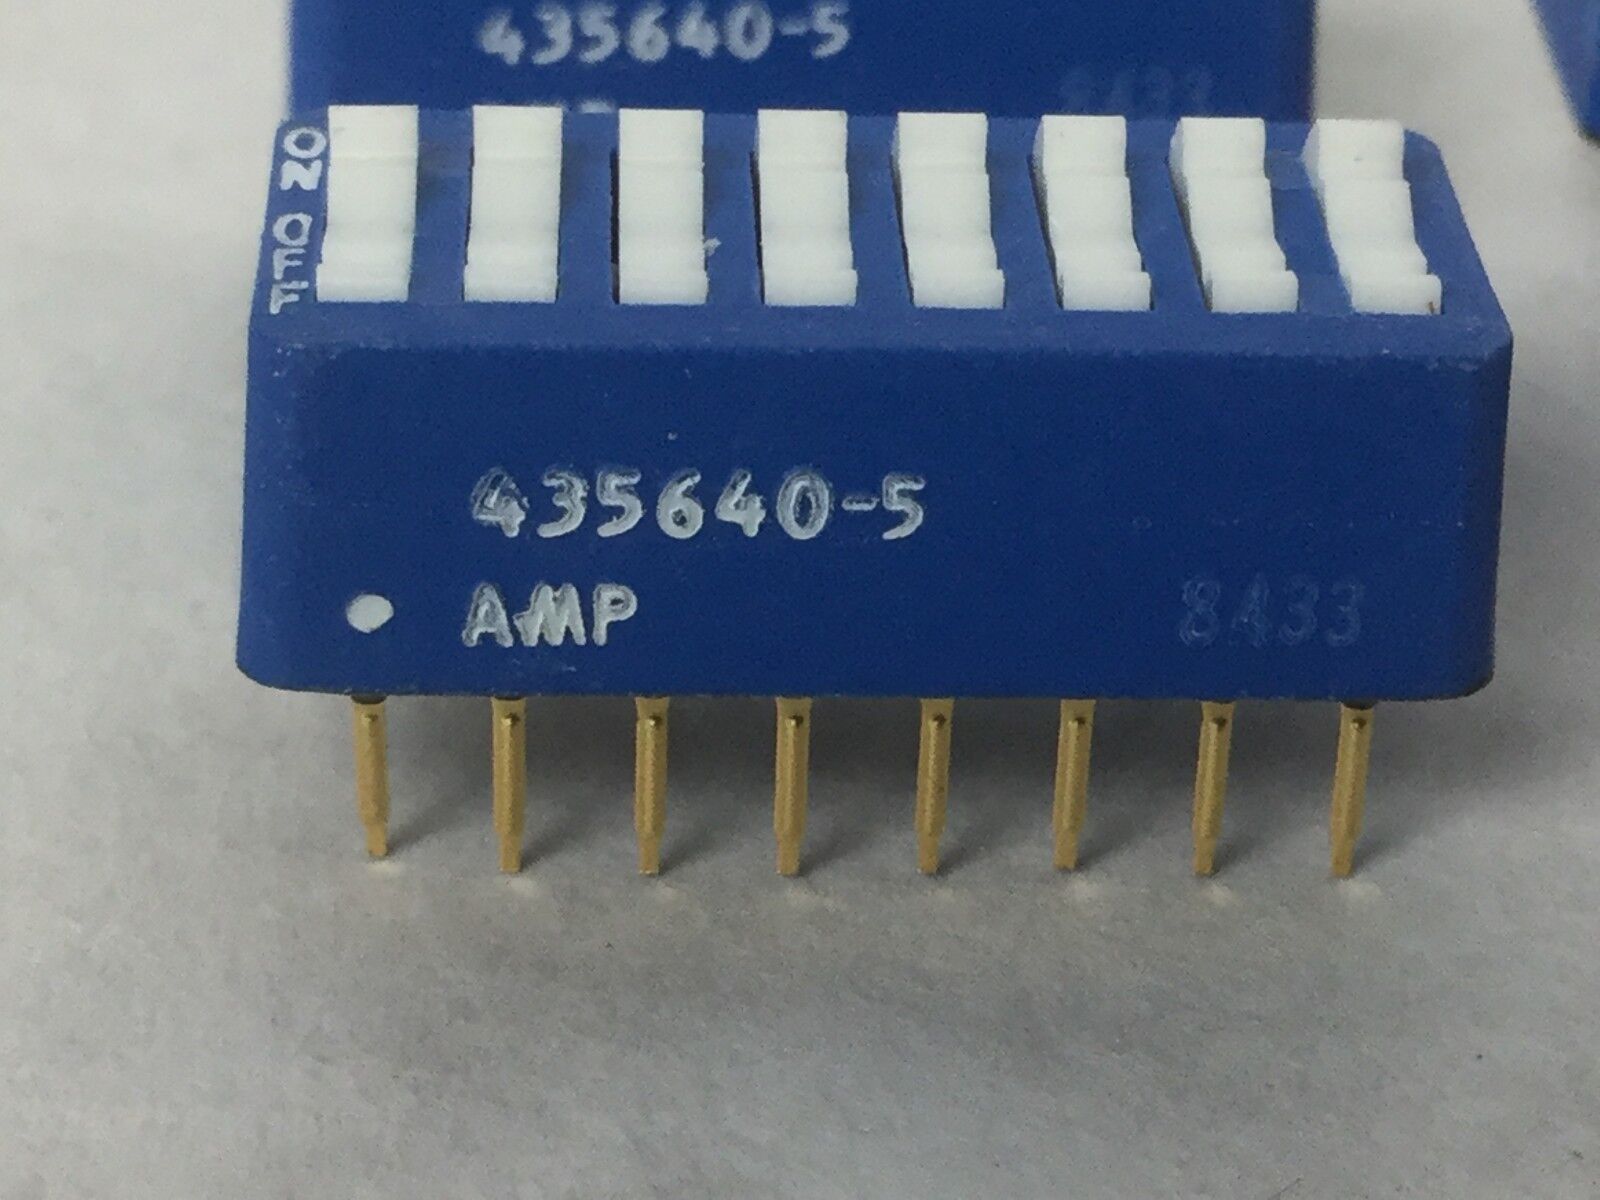 AMP 435640-5 Rocker Switch, Lot of 4, NEW